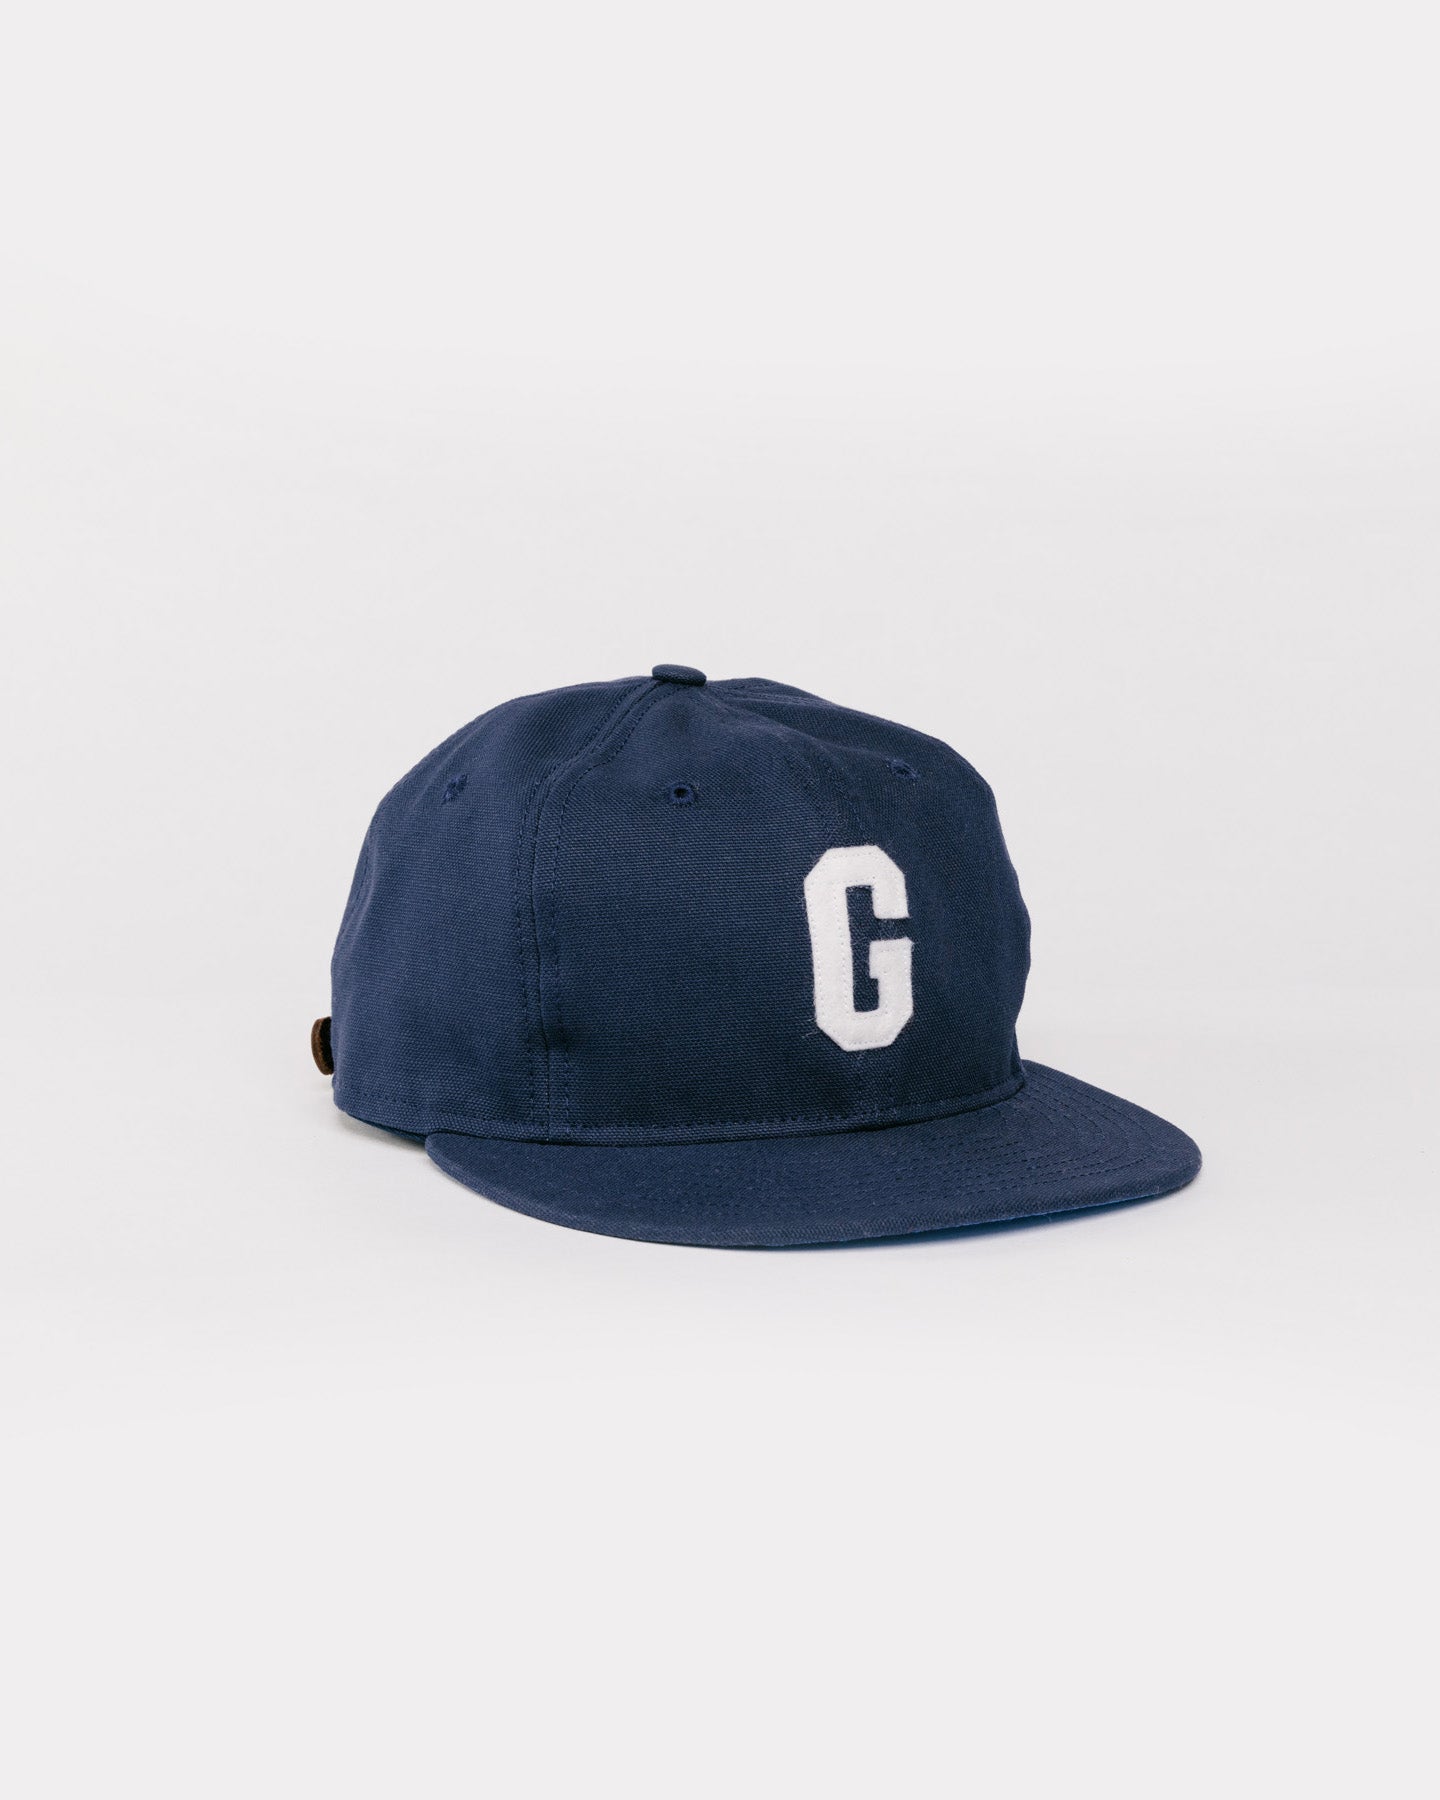 Homestead Grays Navy Vintage Baseball Hat | Charlie Hustle